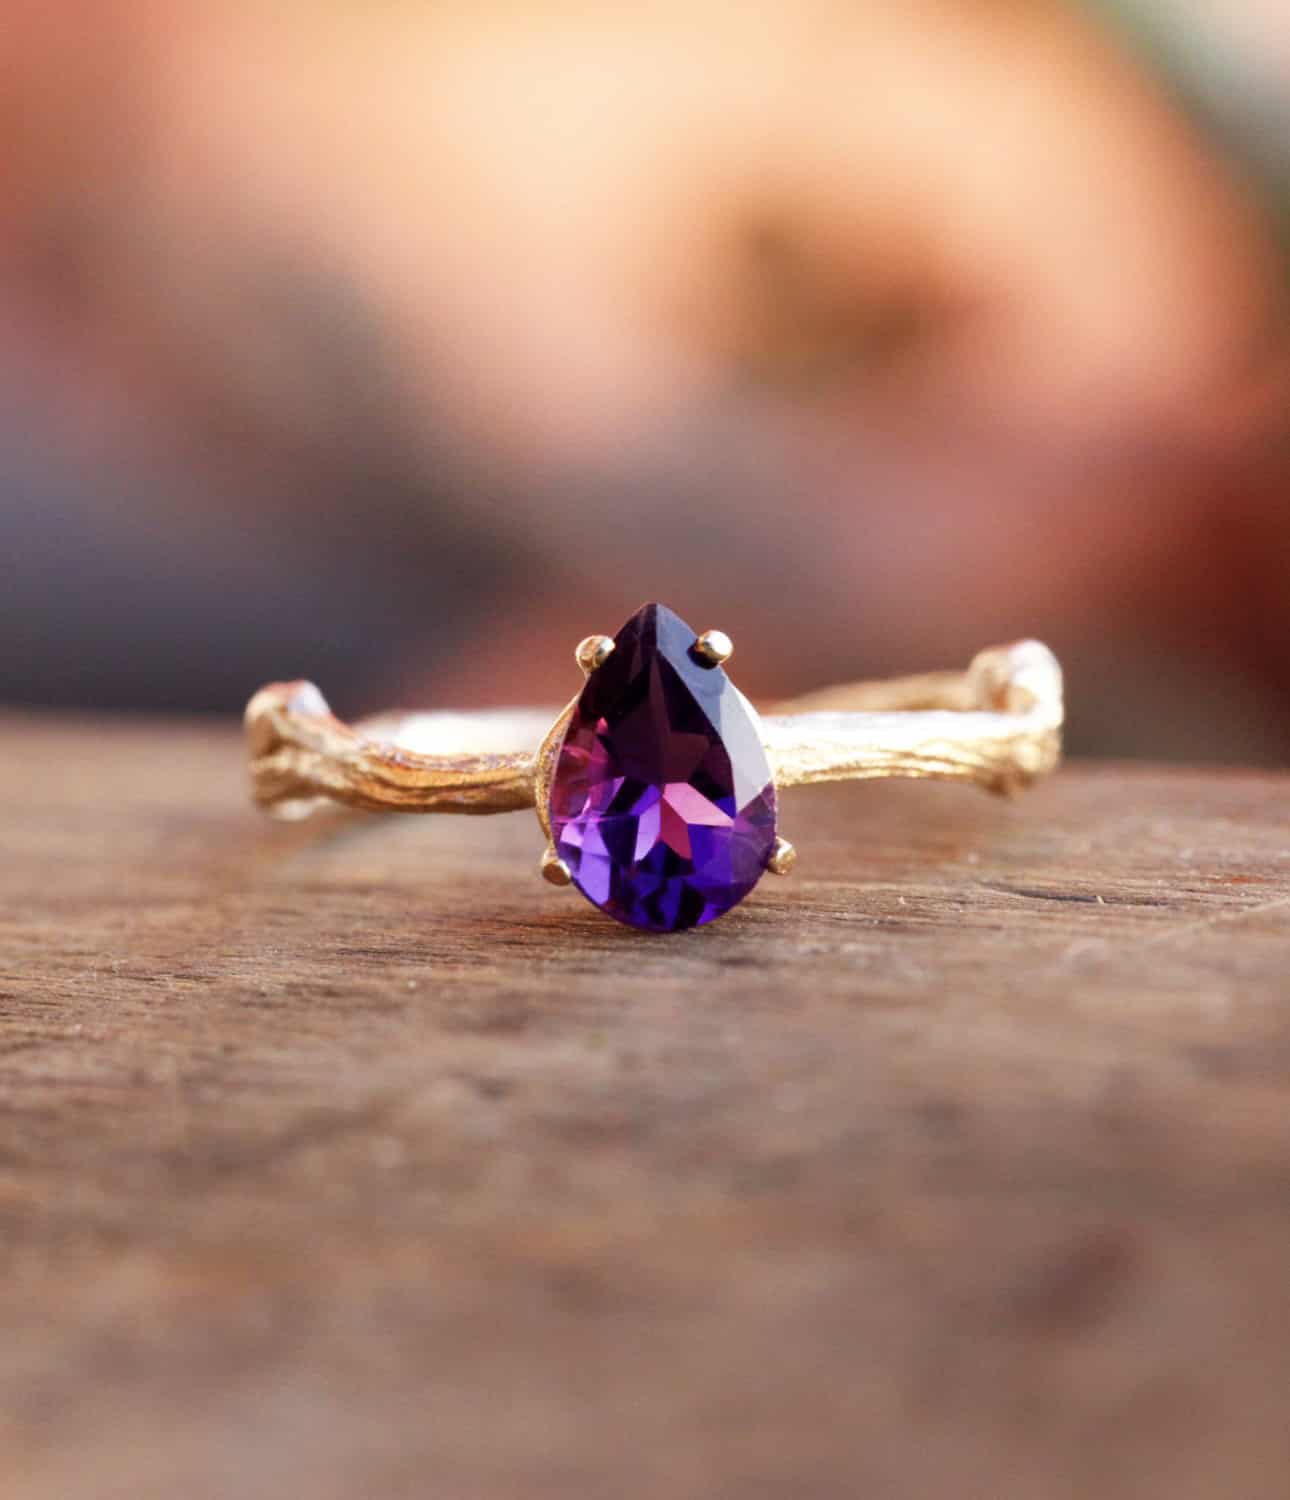 rozhovor: prstýnky inspirované přírodou. sofistikovaná iva vyrábí autentické šperky